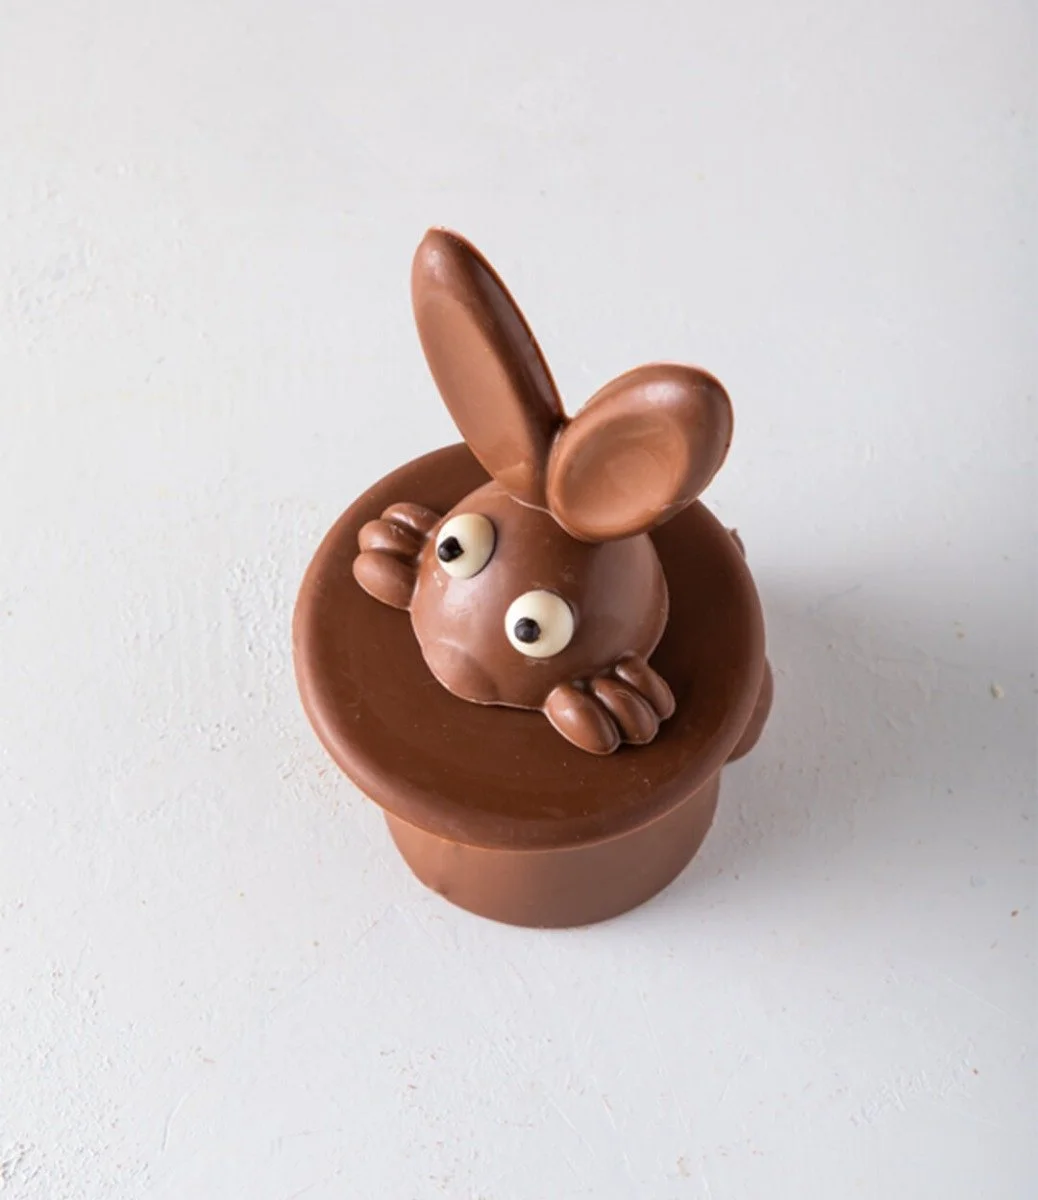 Small Magic Bunny chocolate